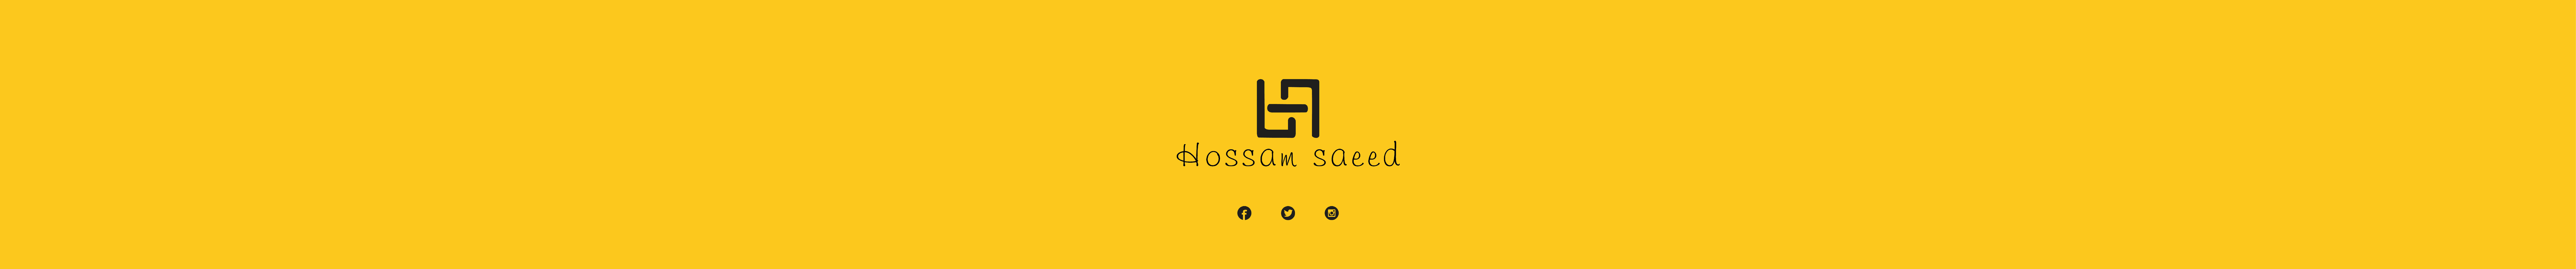 Banner profilu uživatele Hossam saeed